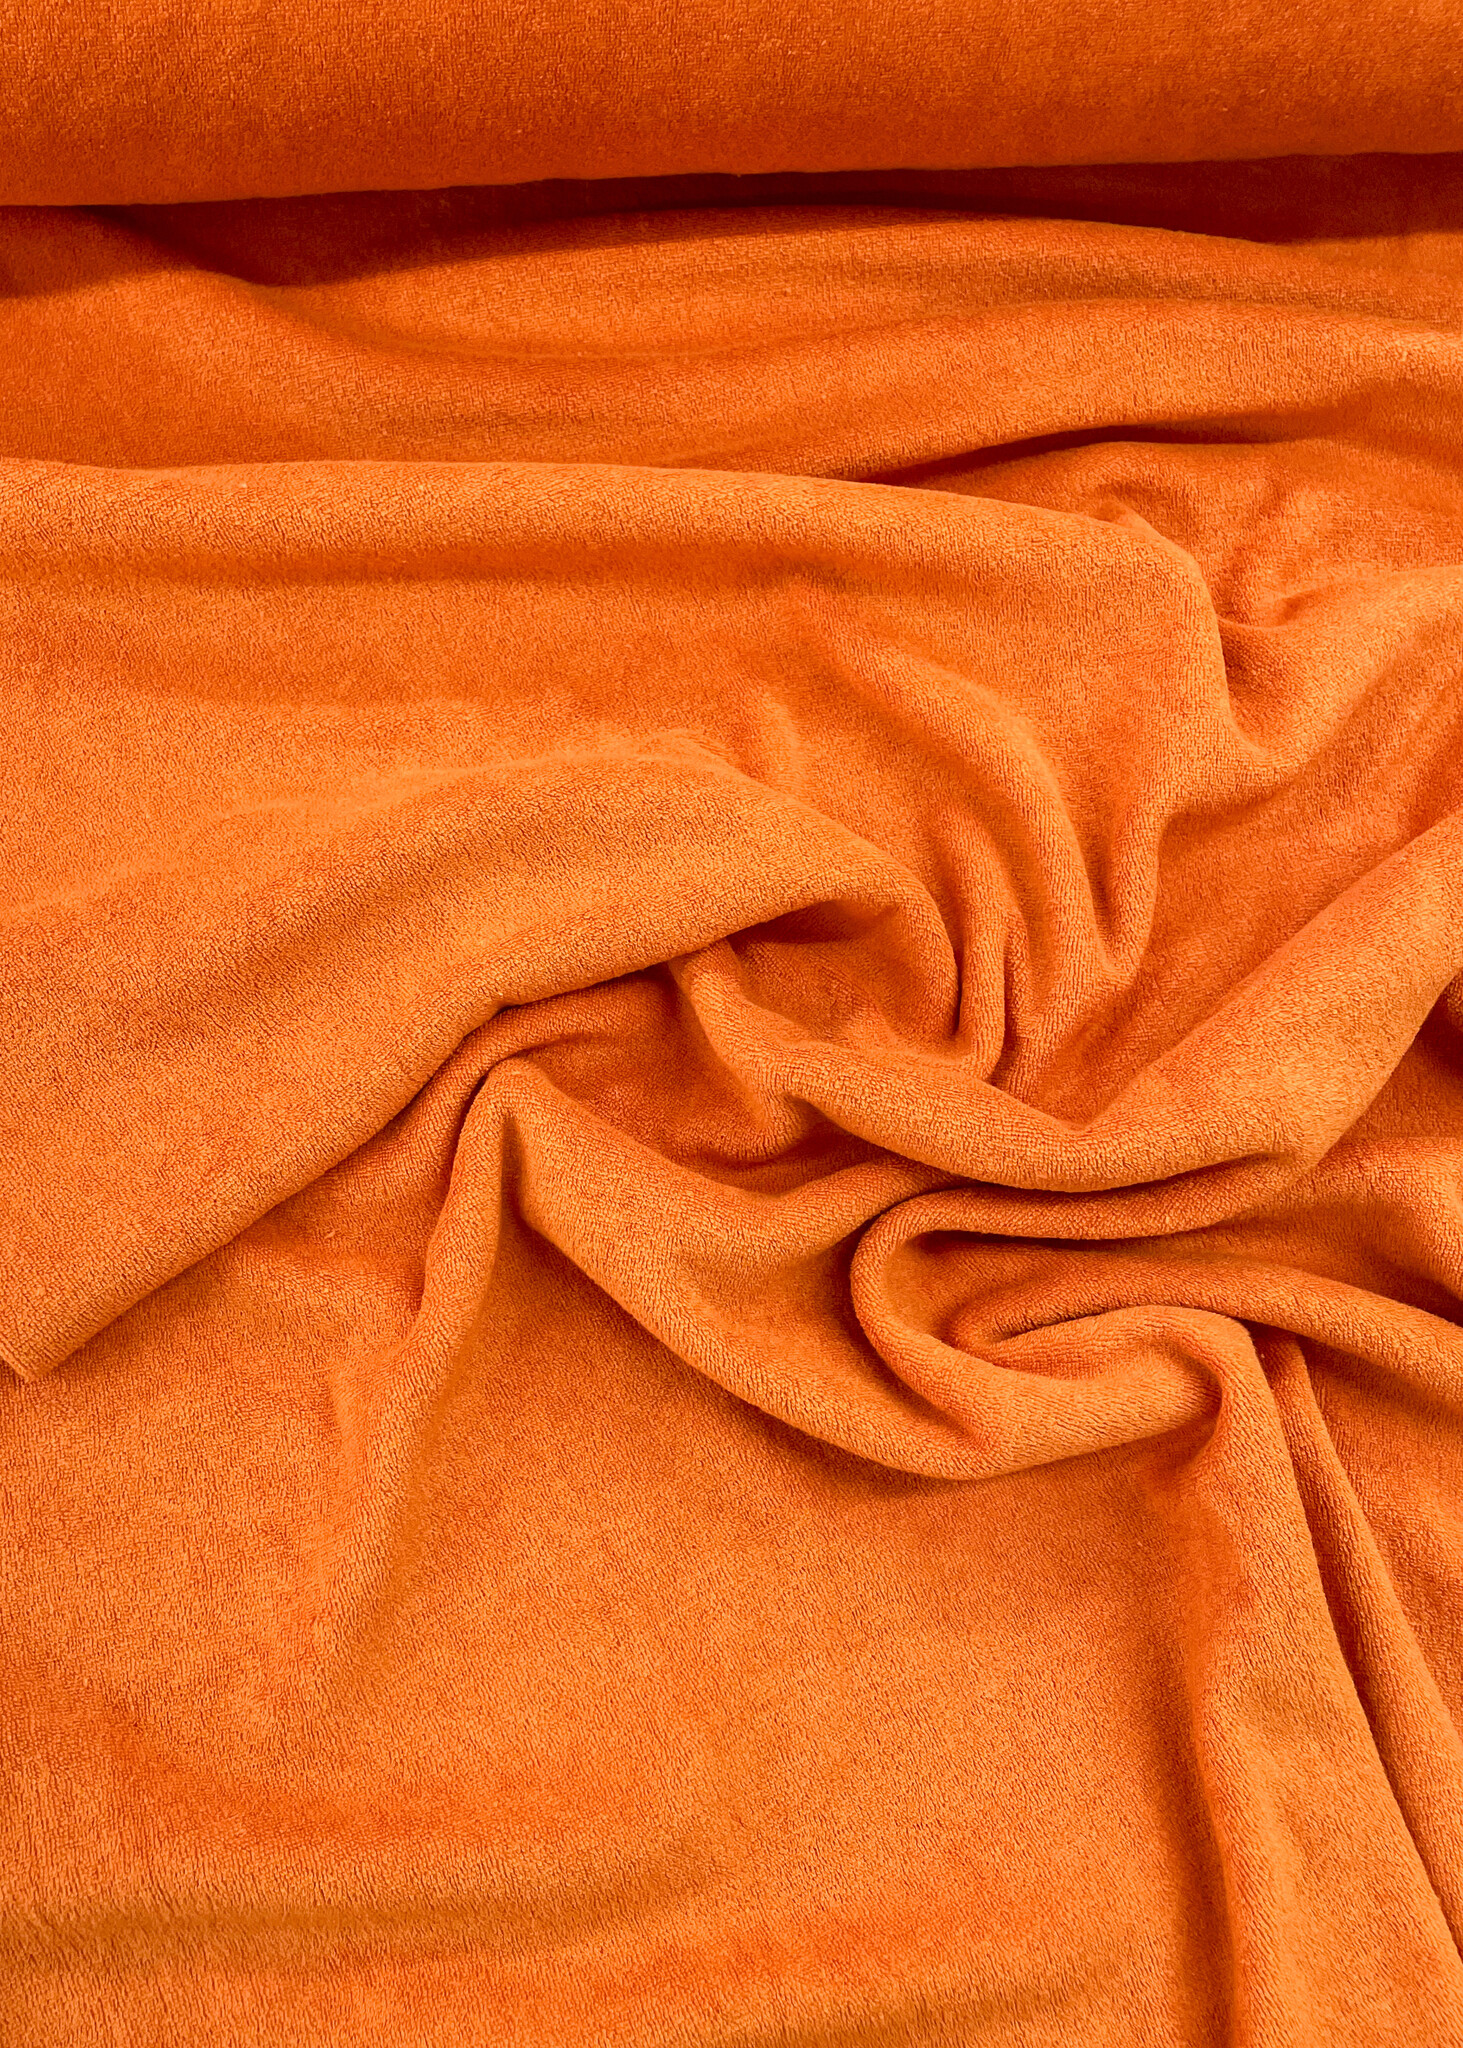 orange sponge - stretch terry cloth